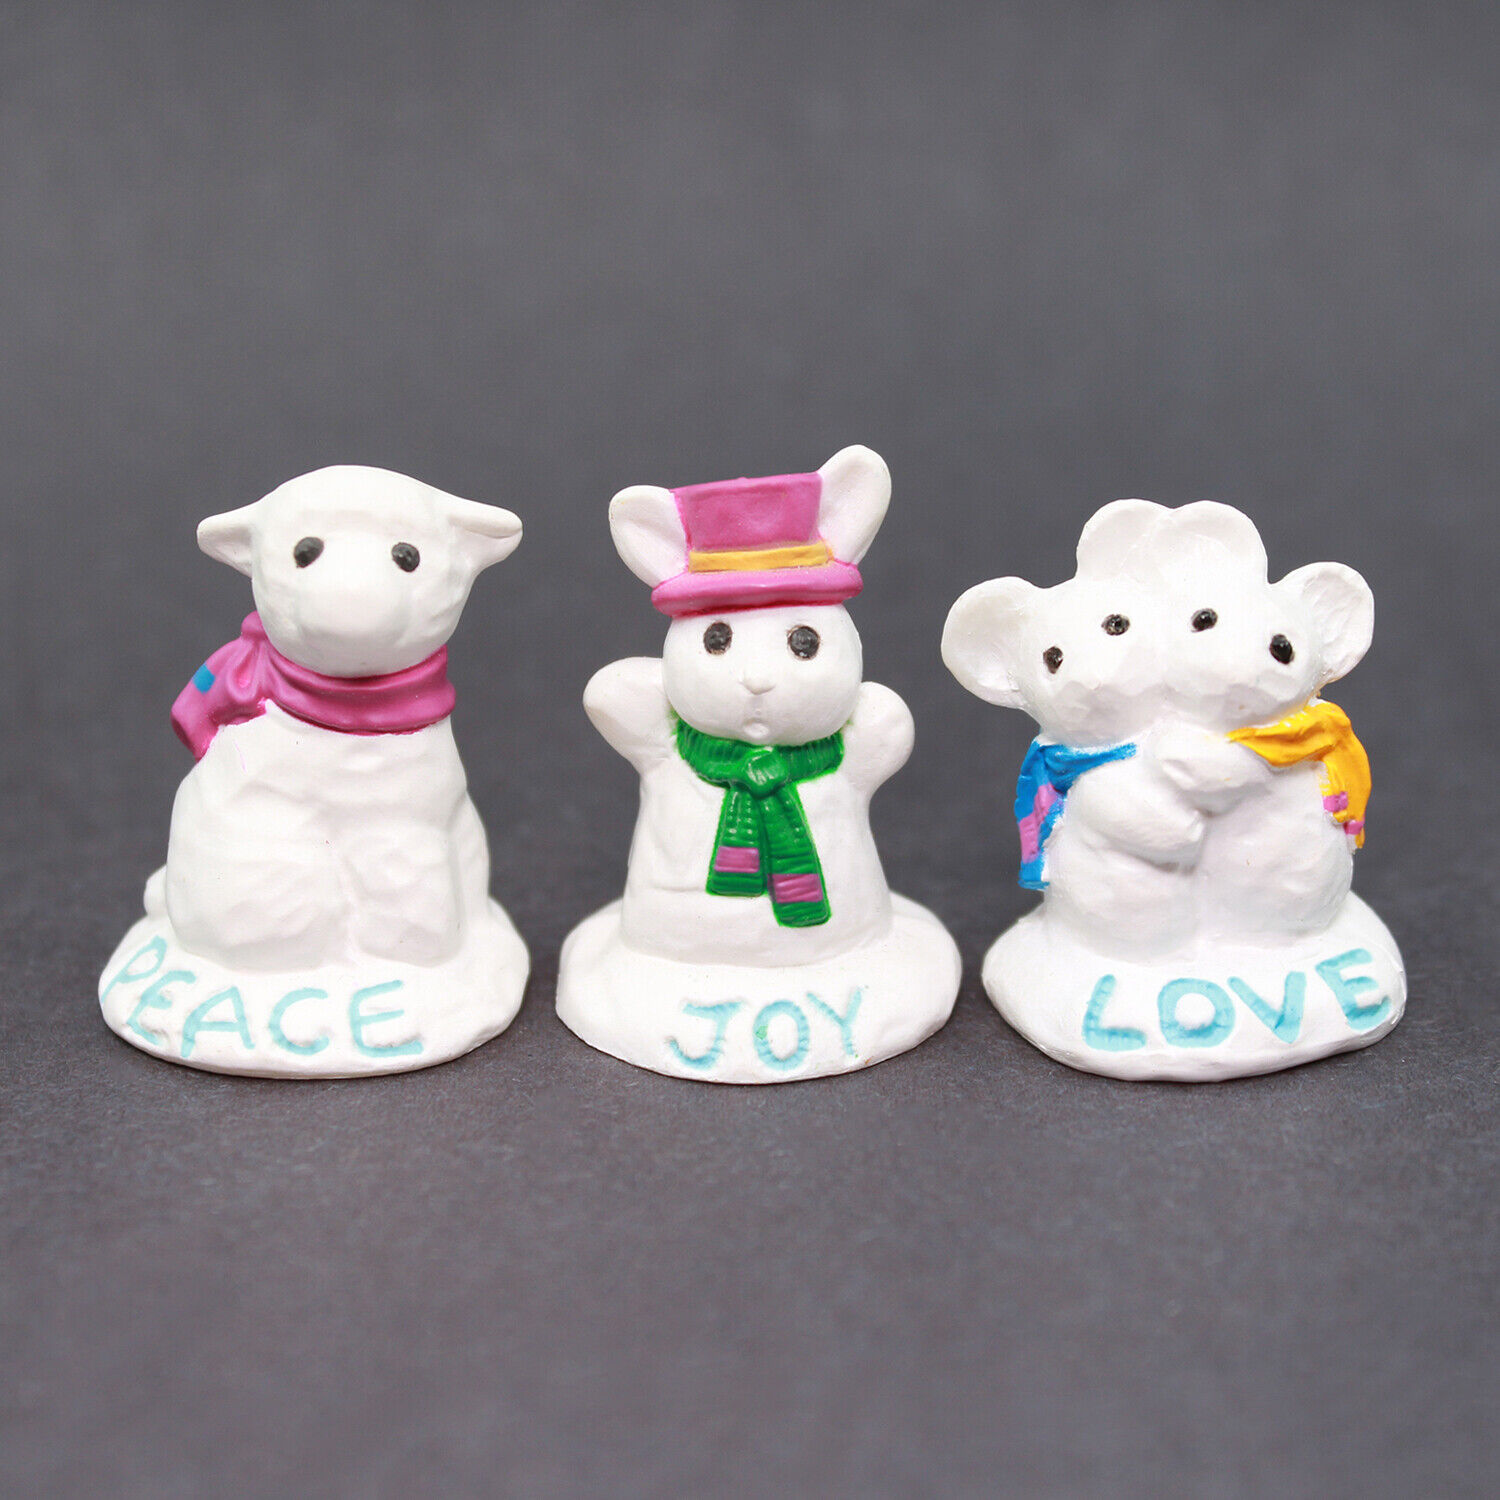 LOVE JOY & PEACE - 1991 Hallmark Merry Miniatures Christmas Figures